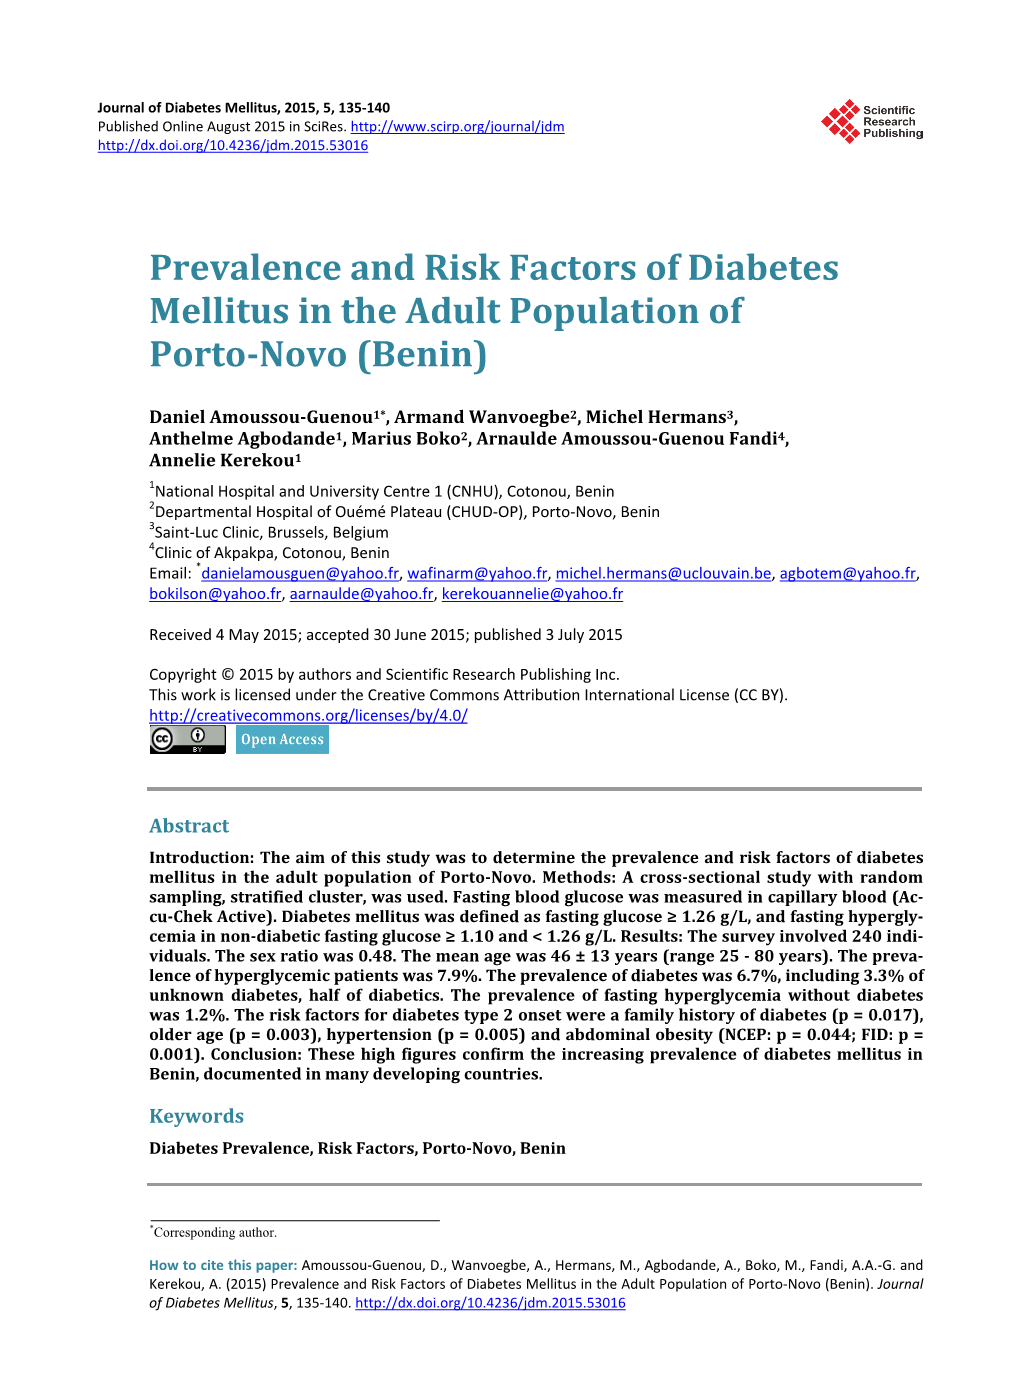 Prevalence and Risk Factors of Diabetes Mellitus in the Adult Population of Porto-Novo (Benin)